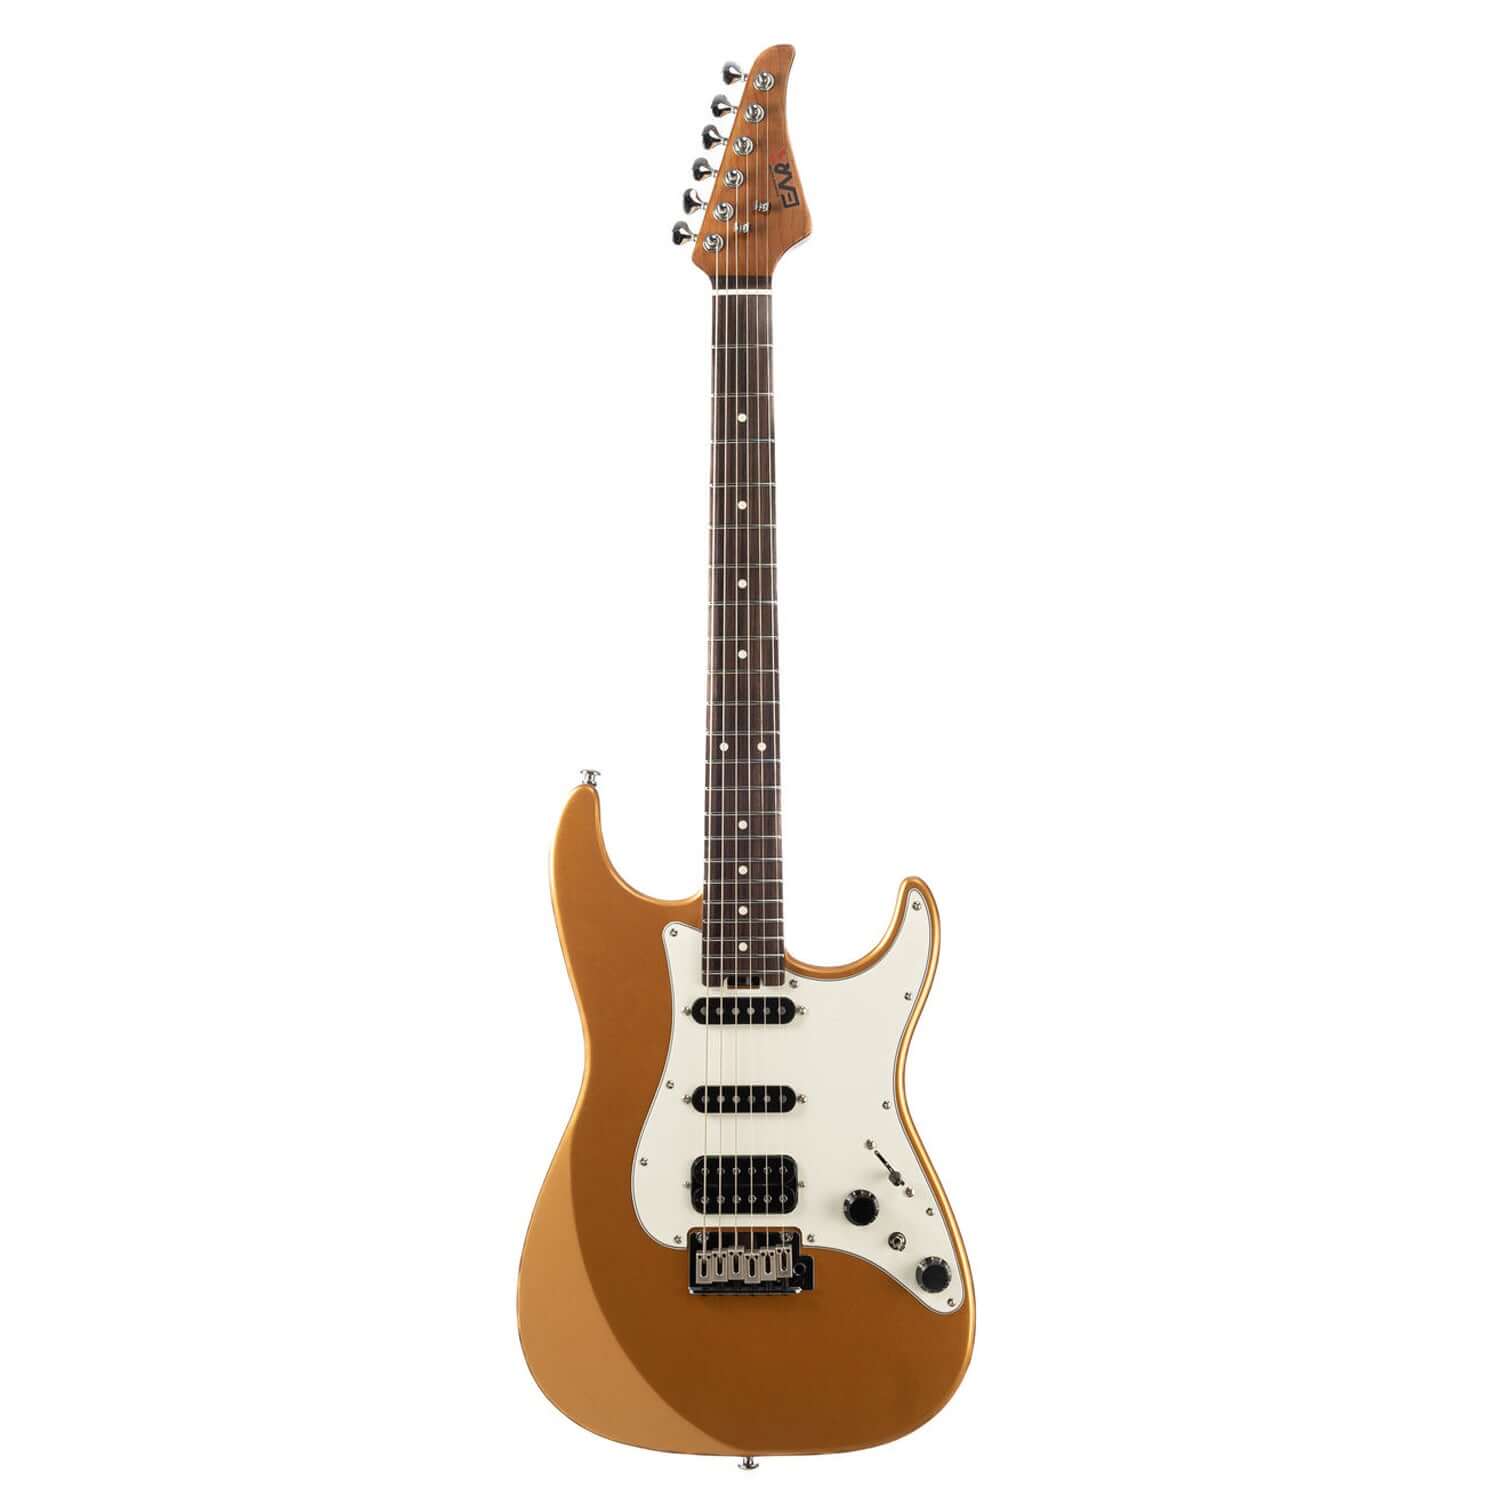 EART DMX-9 electric guitar gold